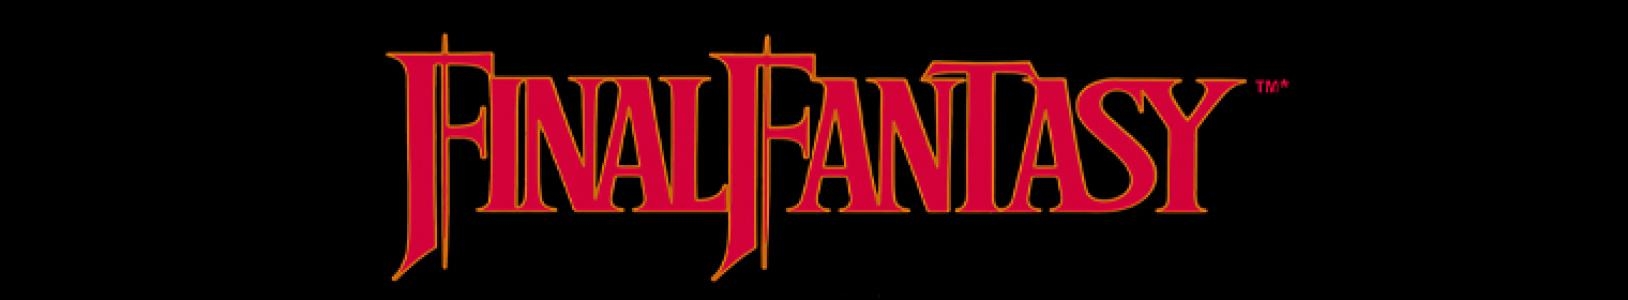 Final Fantasy banner